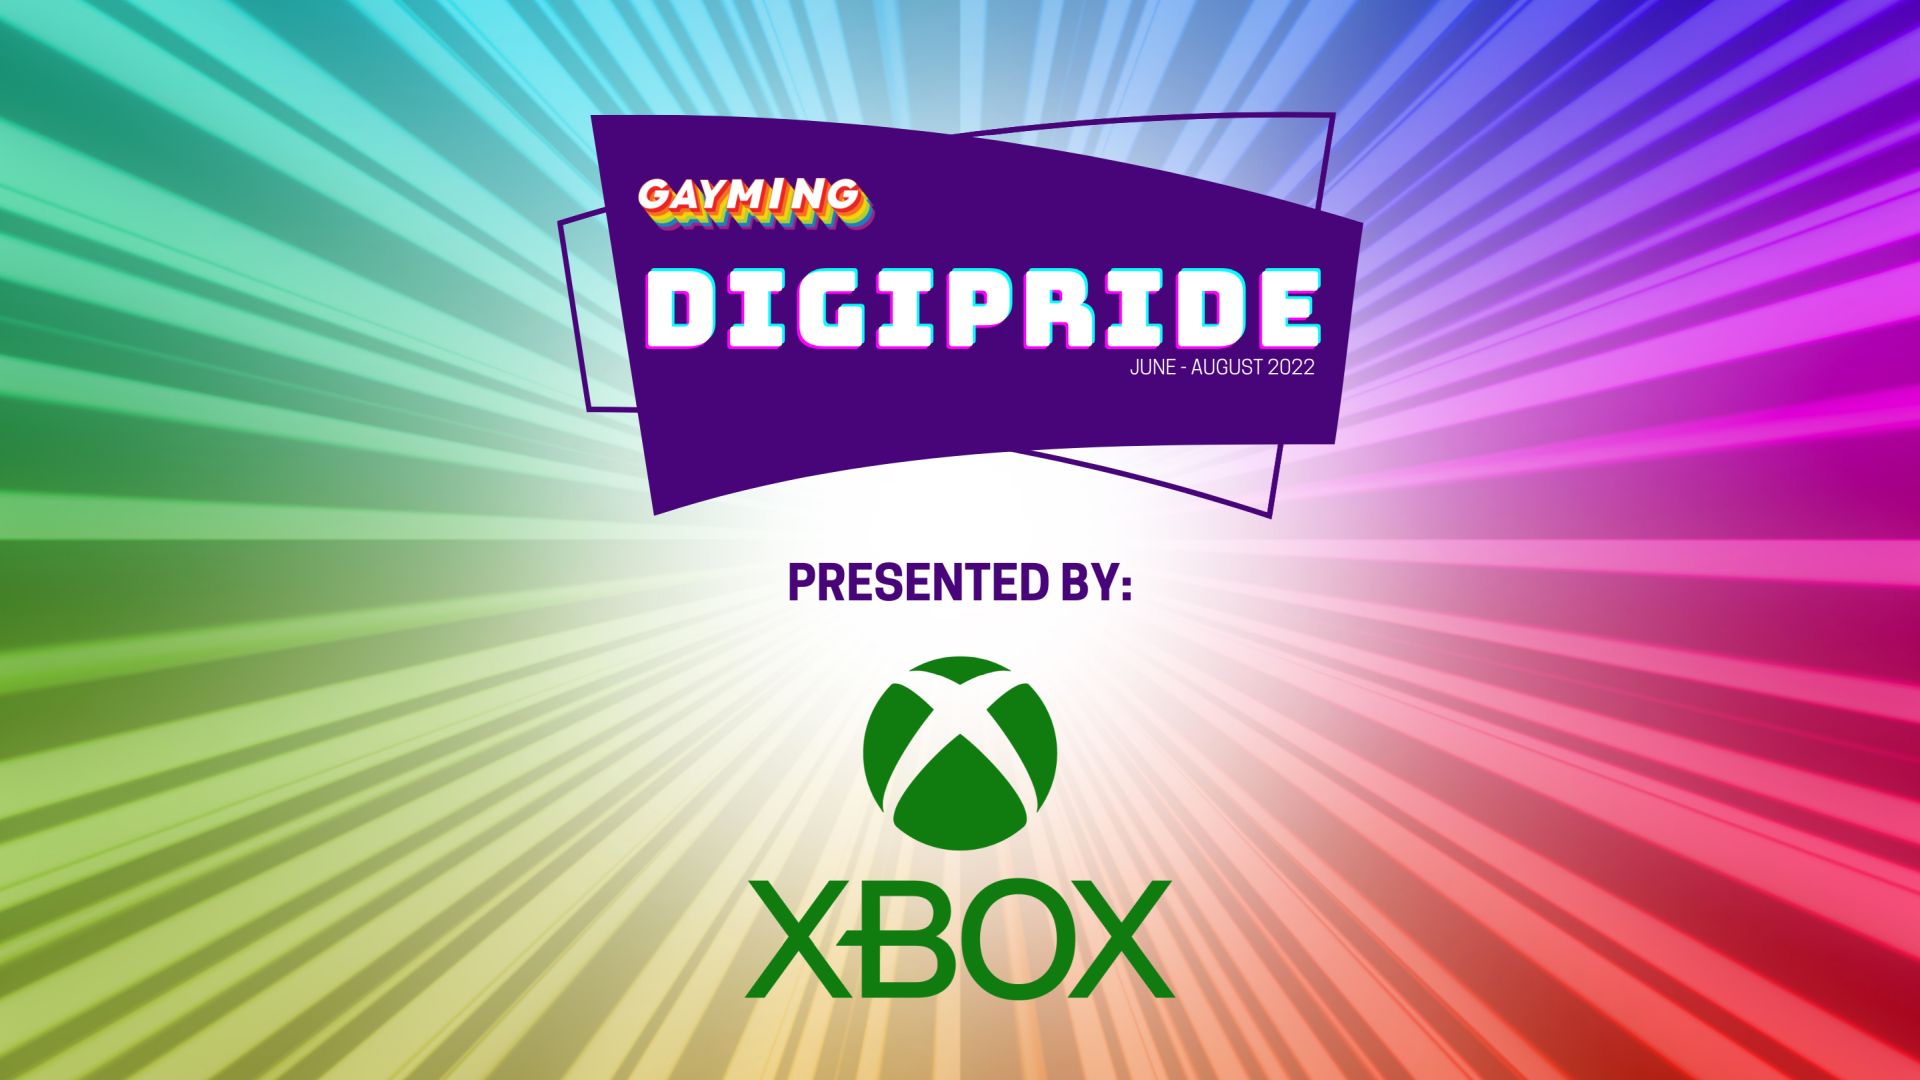 Xbox 로고가 있는 DIGIPRIDE 이벤트 그래픽은 중앙에서 반짝이는 빛에서 발산하는 밝은 녹색, 보라색, 분홍색, 노란색 및 녹색을 특징으로 합니다.